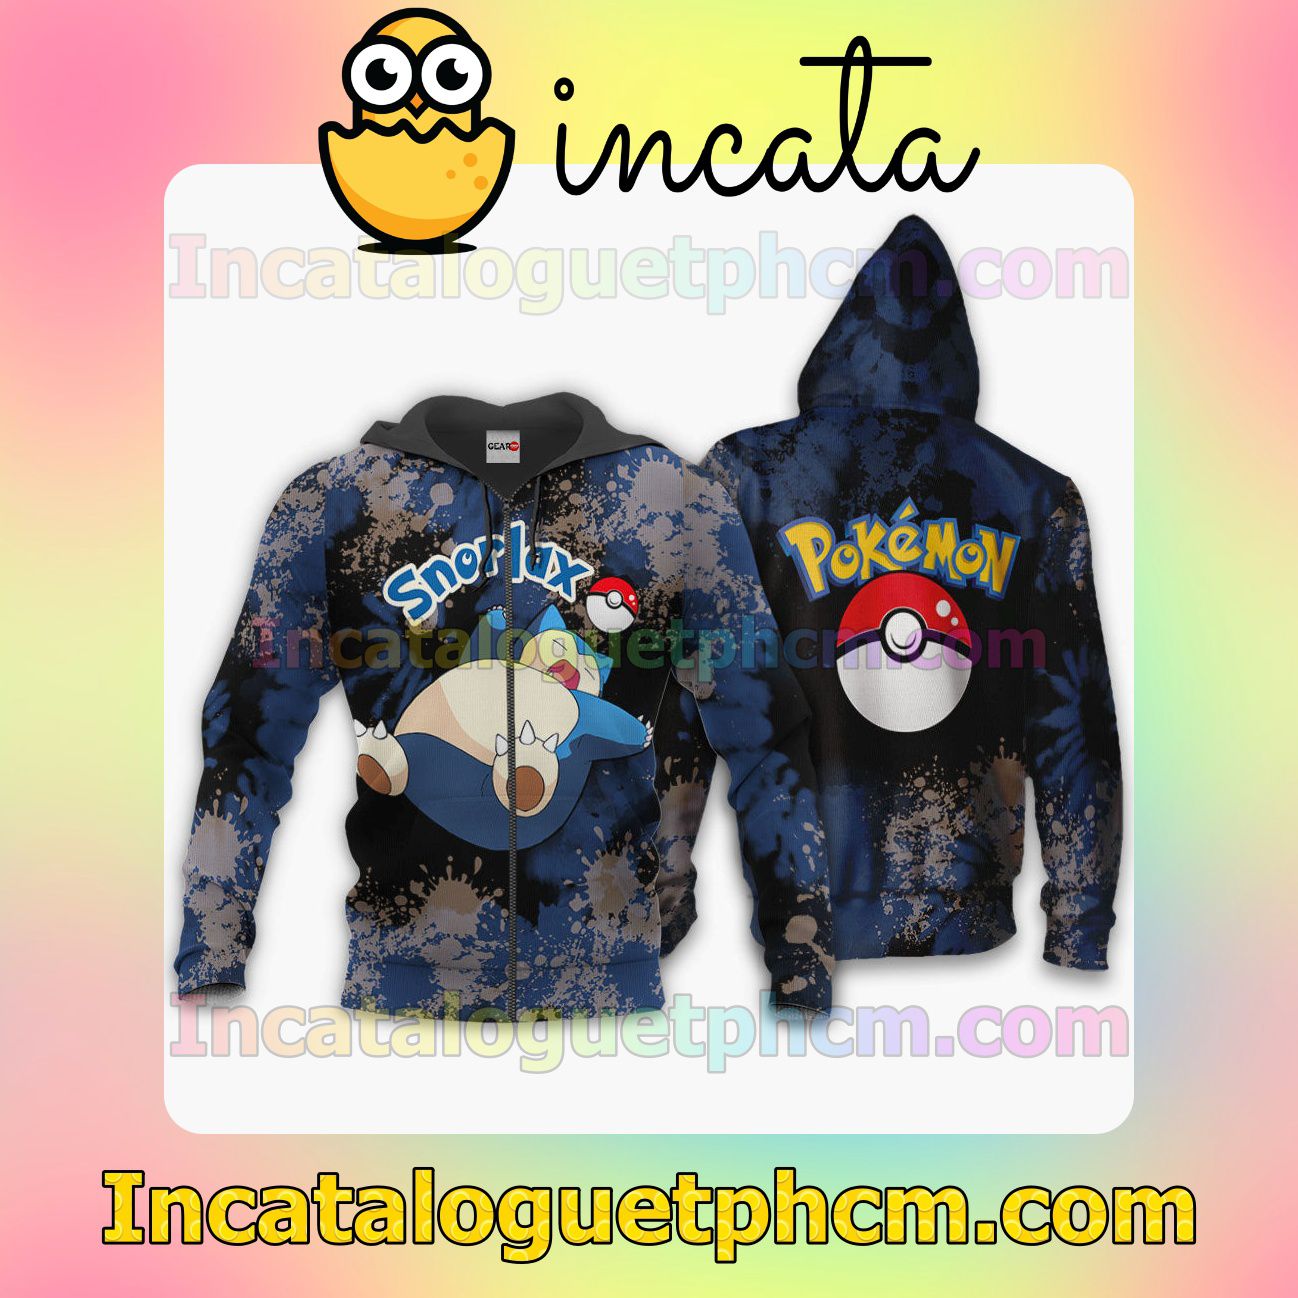 Snorlax Pokemon Anime Tie Dye Style Clothing Merch Zip Hoodie Jacket Shirts